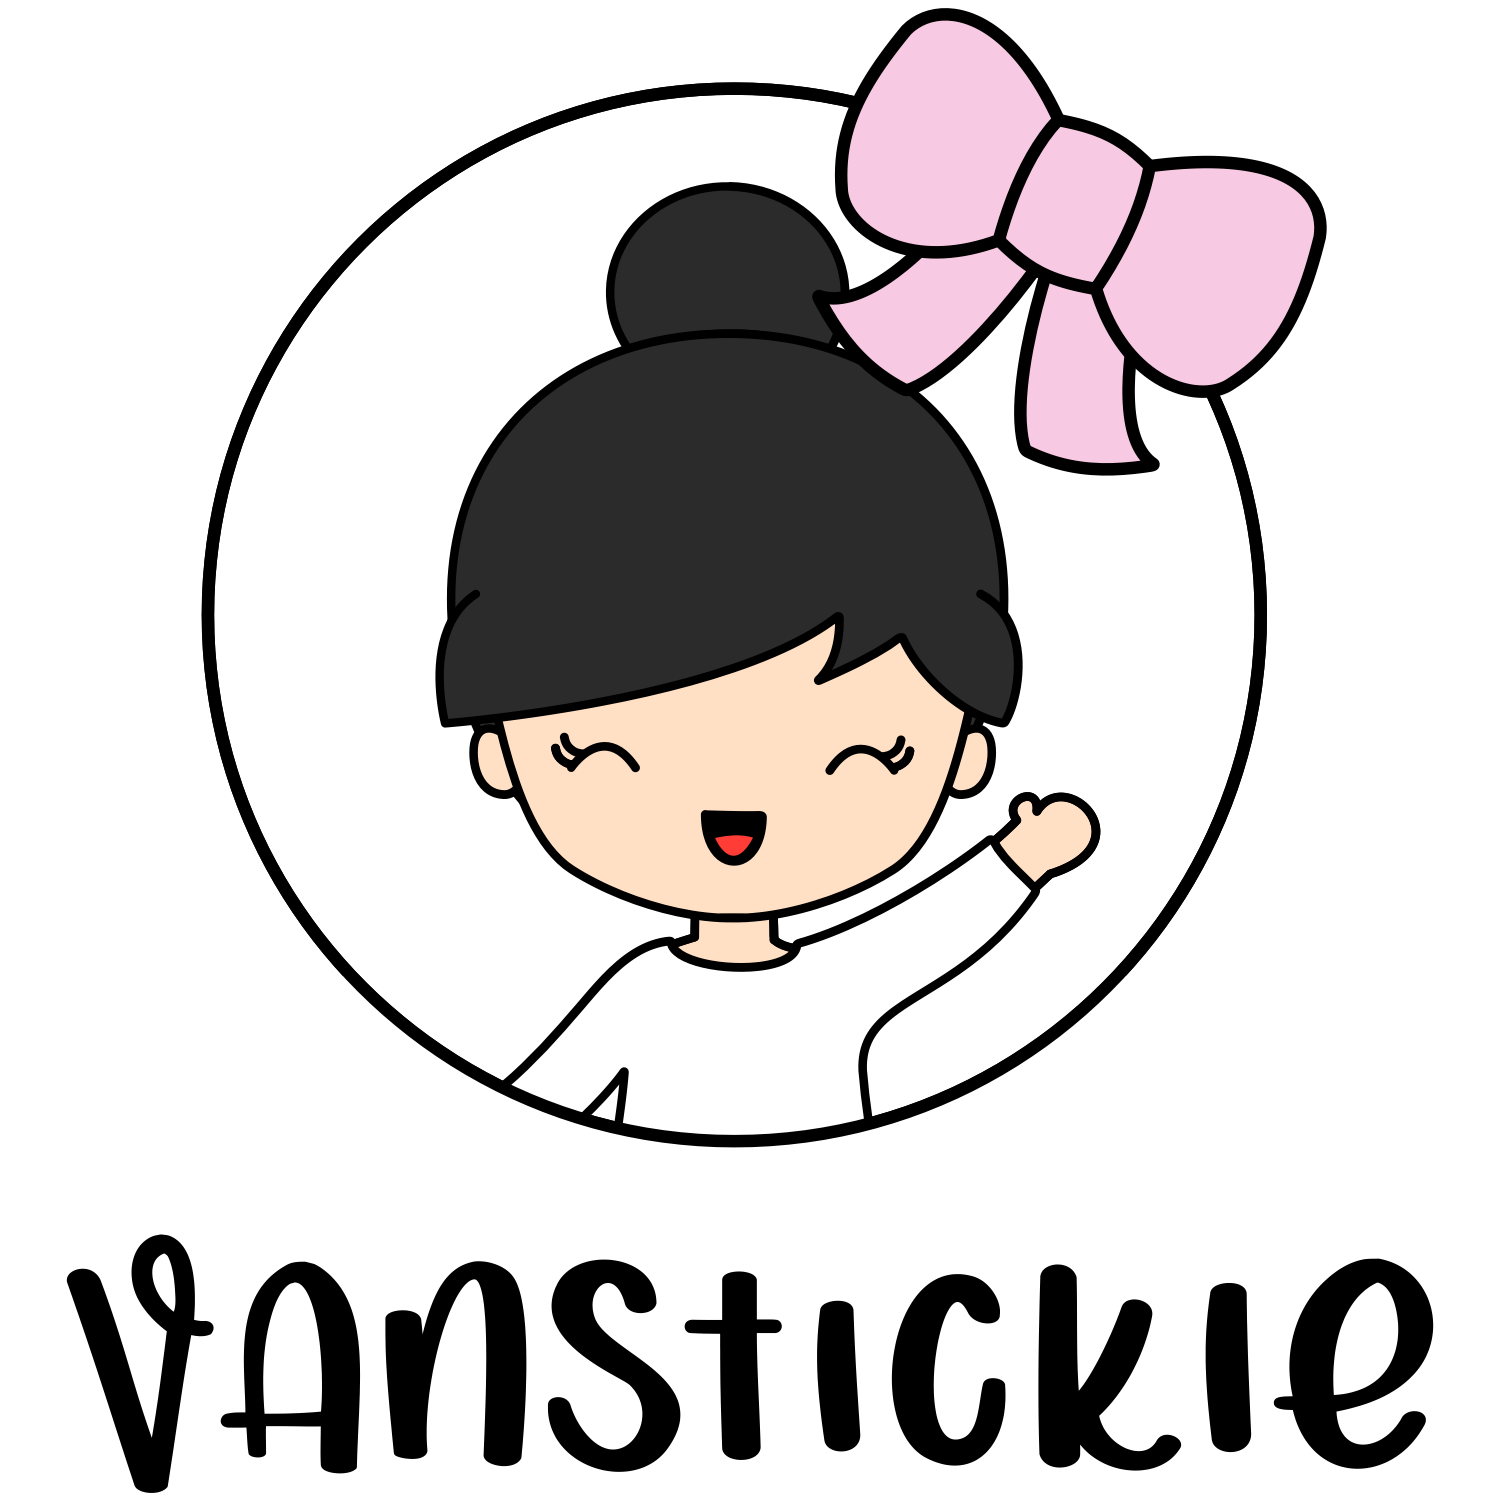 Vanstickie